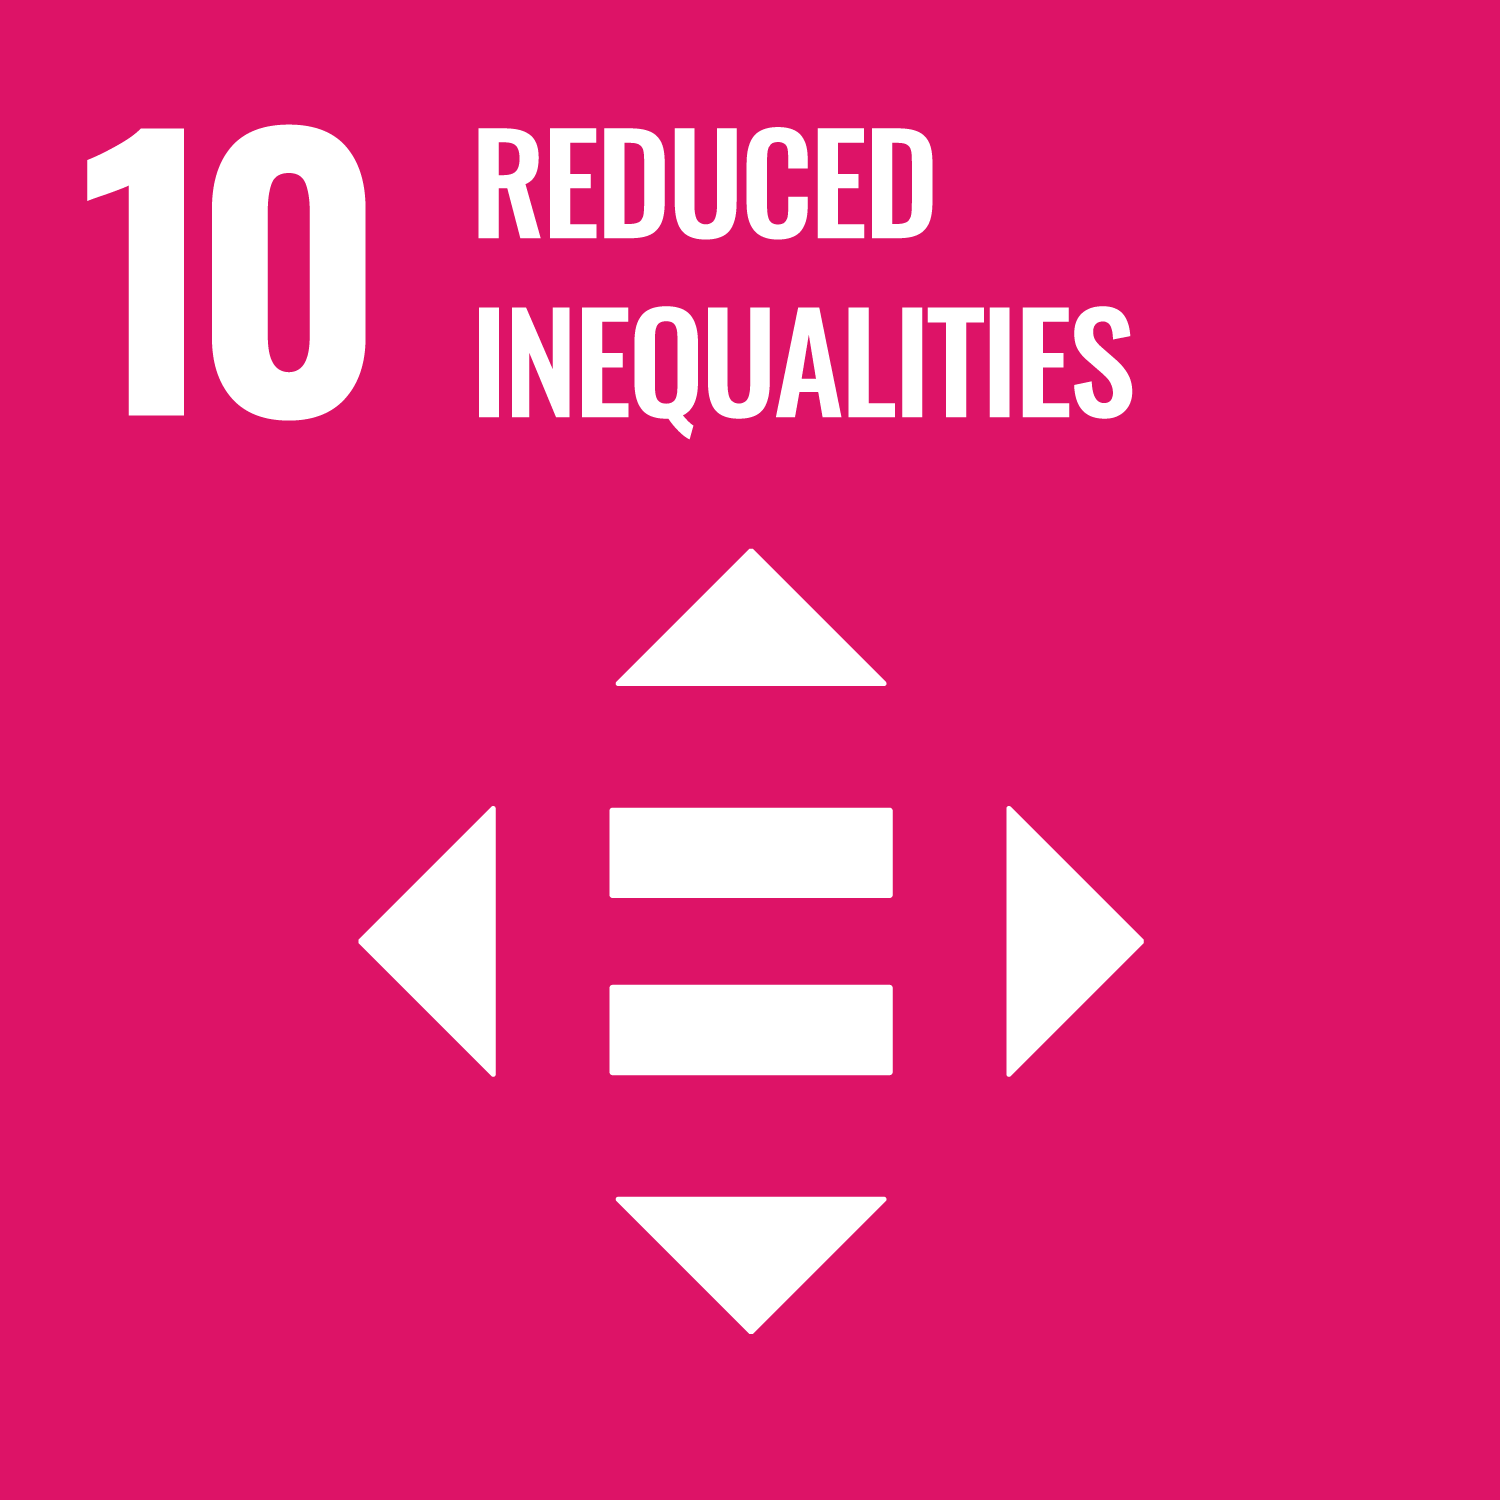 Sustainable Development Goal: SDG 10 "Reduced inequalities"